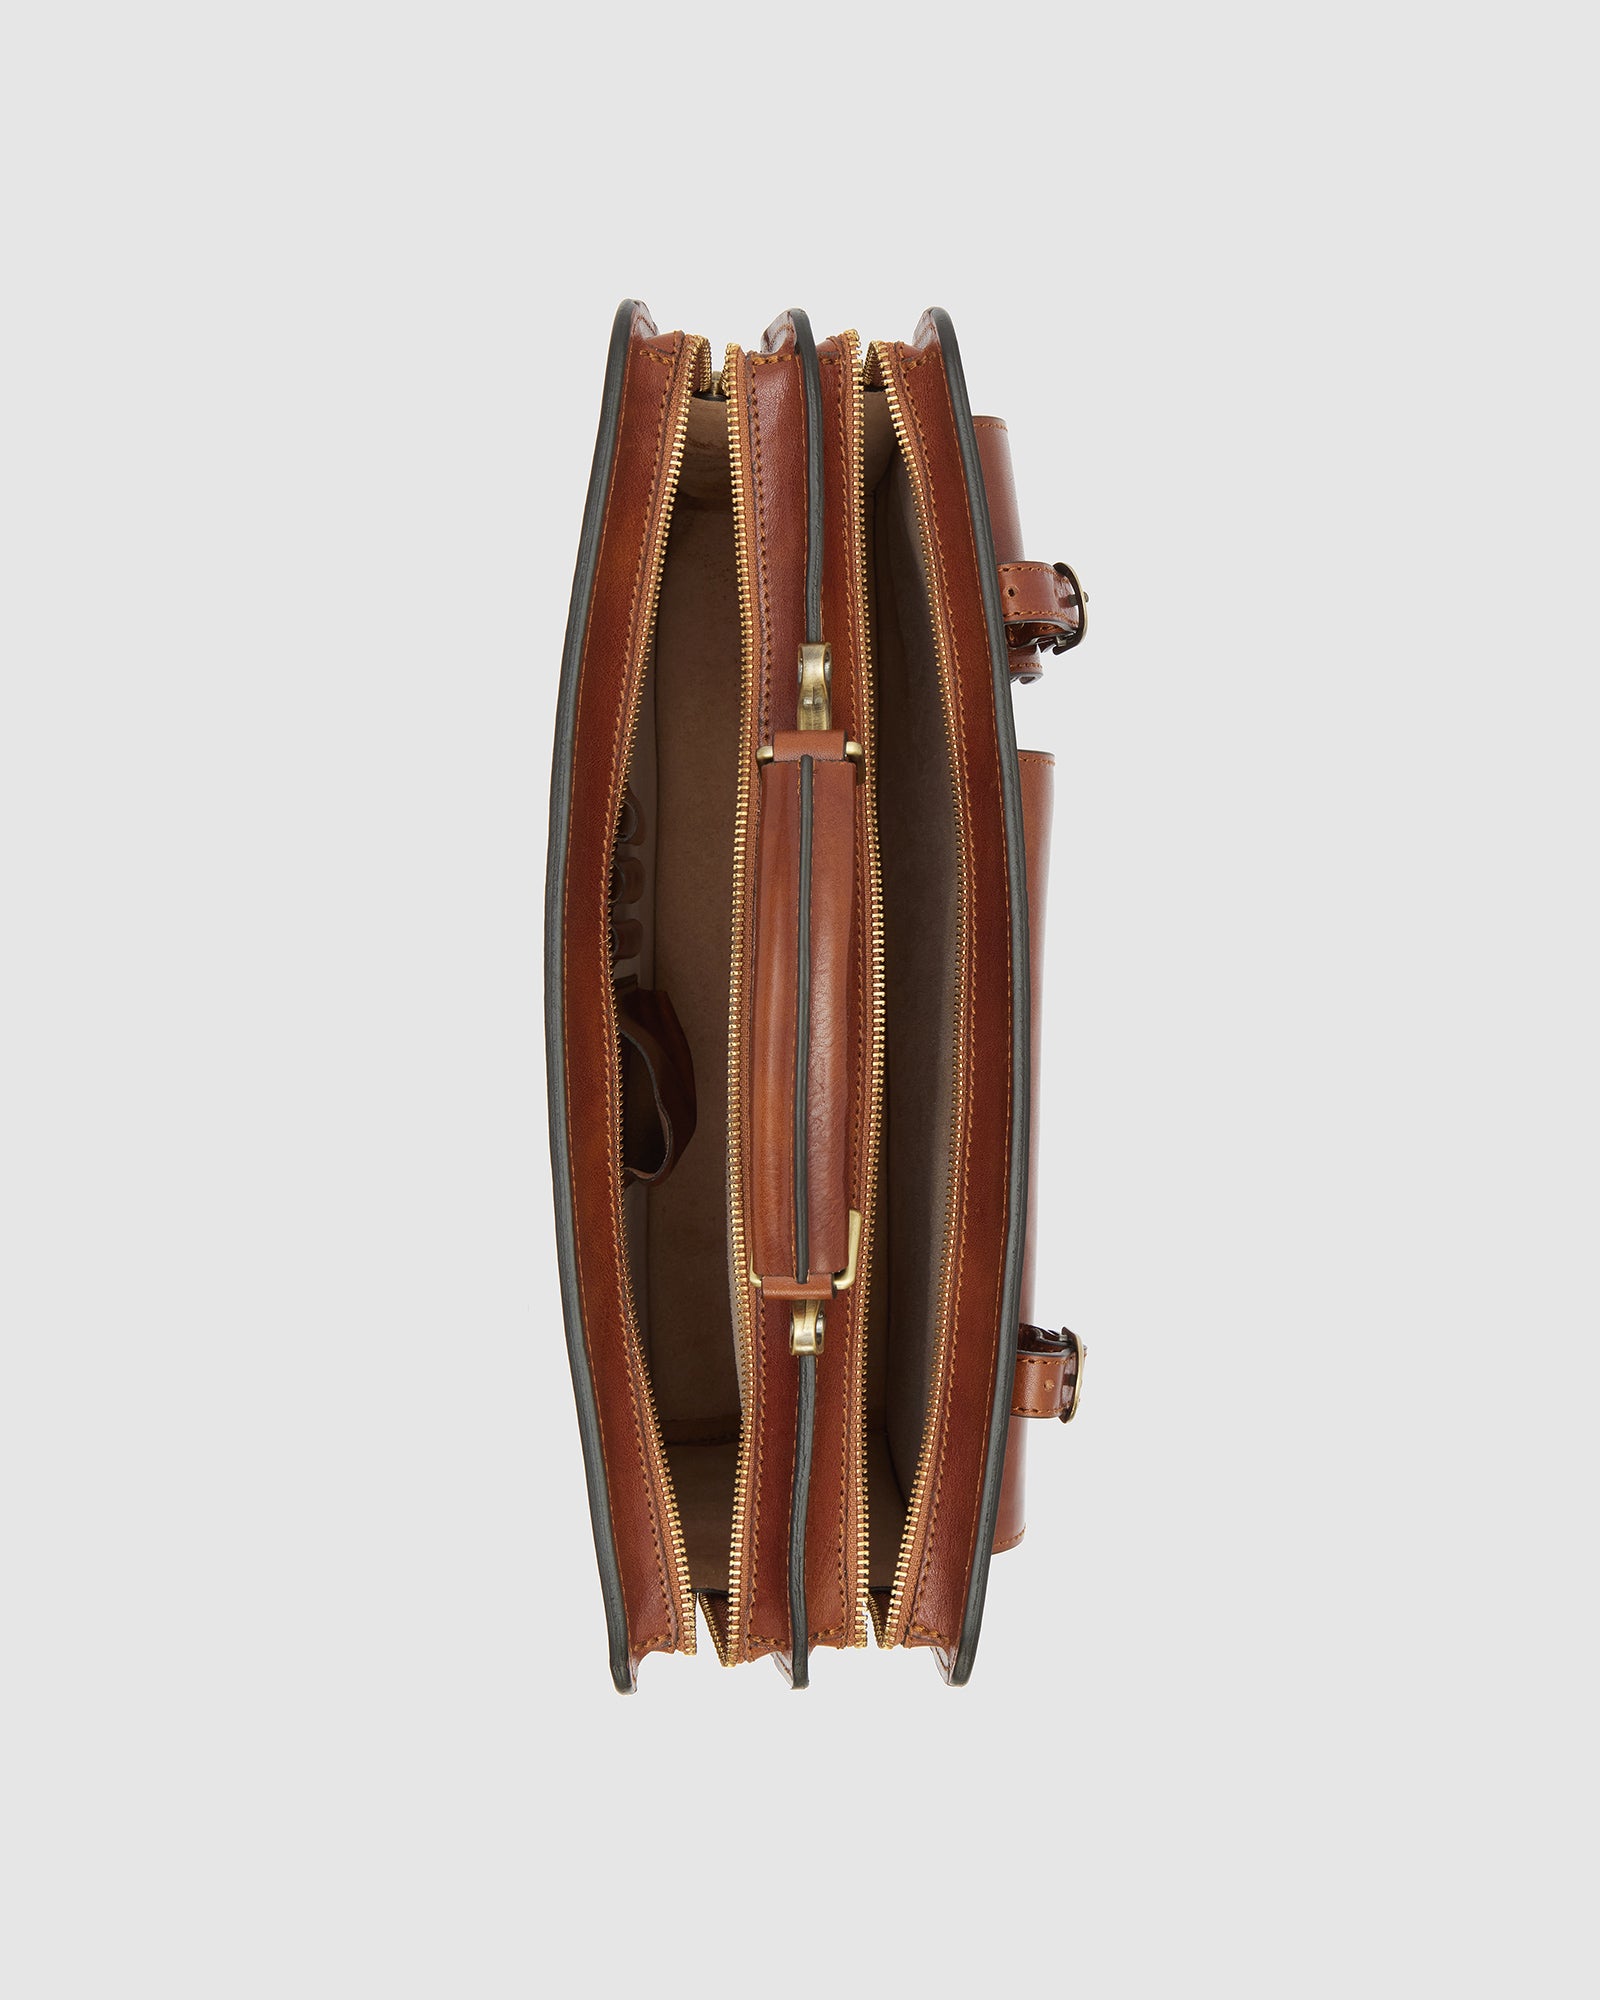 Munich Tan - Double Compartment Leather Briefcase